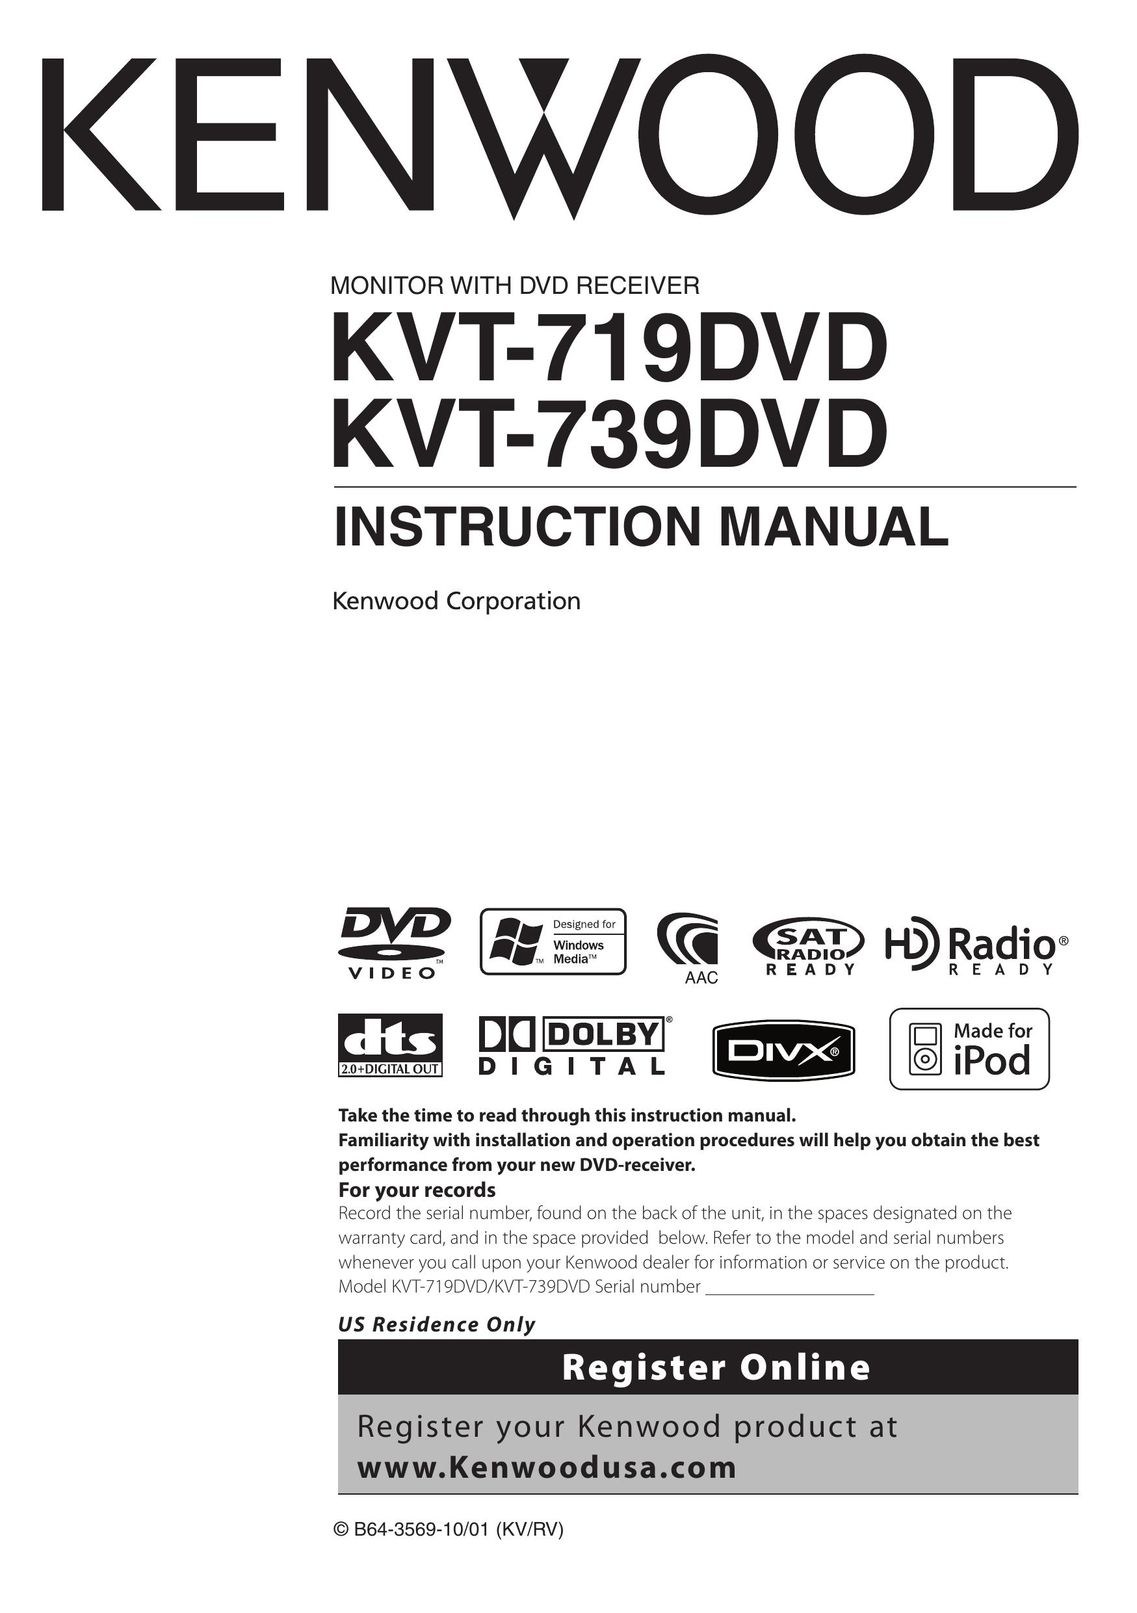 Kenwood KVT-719DVD Portable DVD Player User Manual